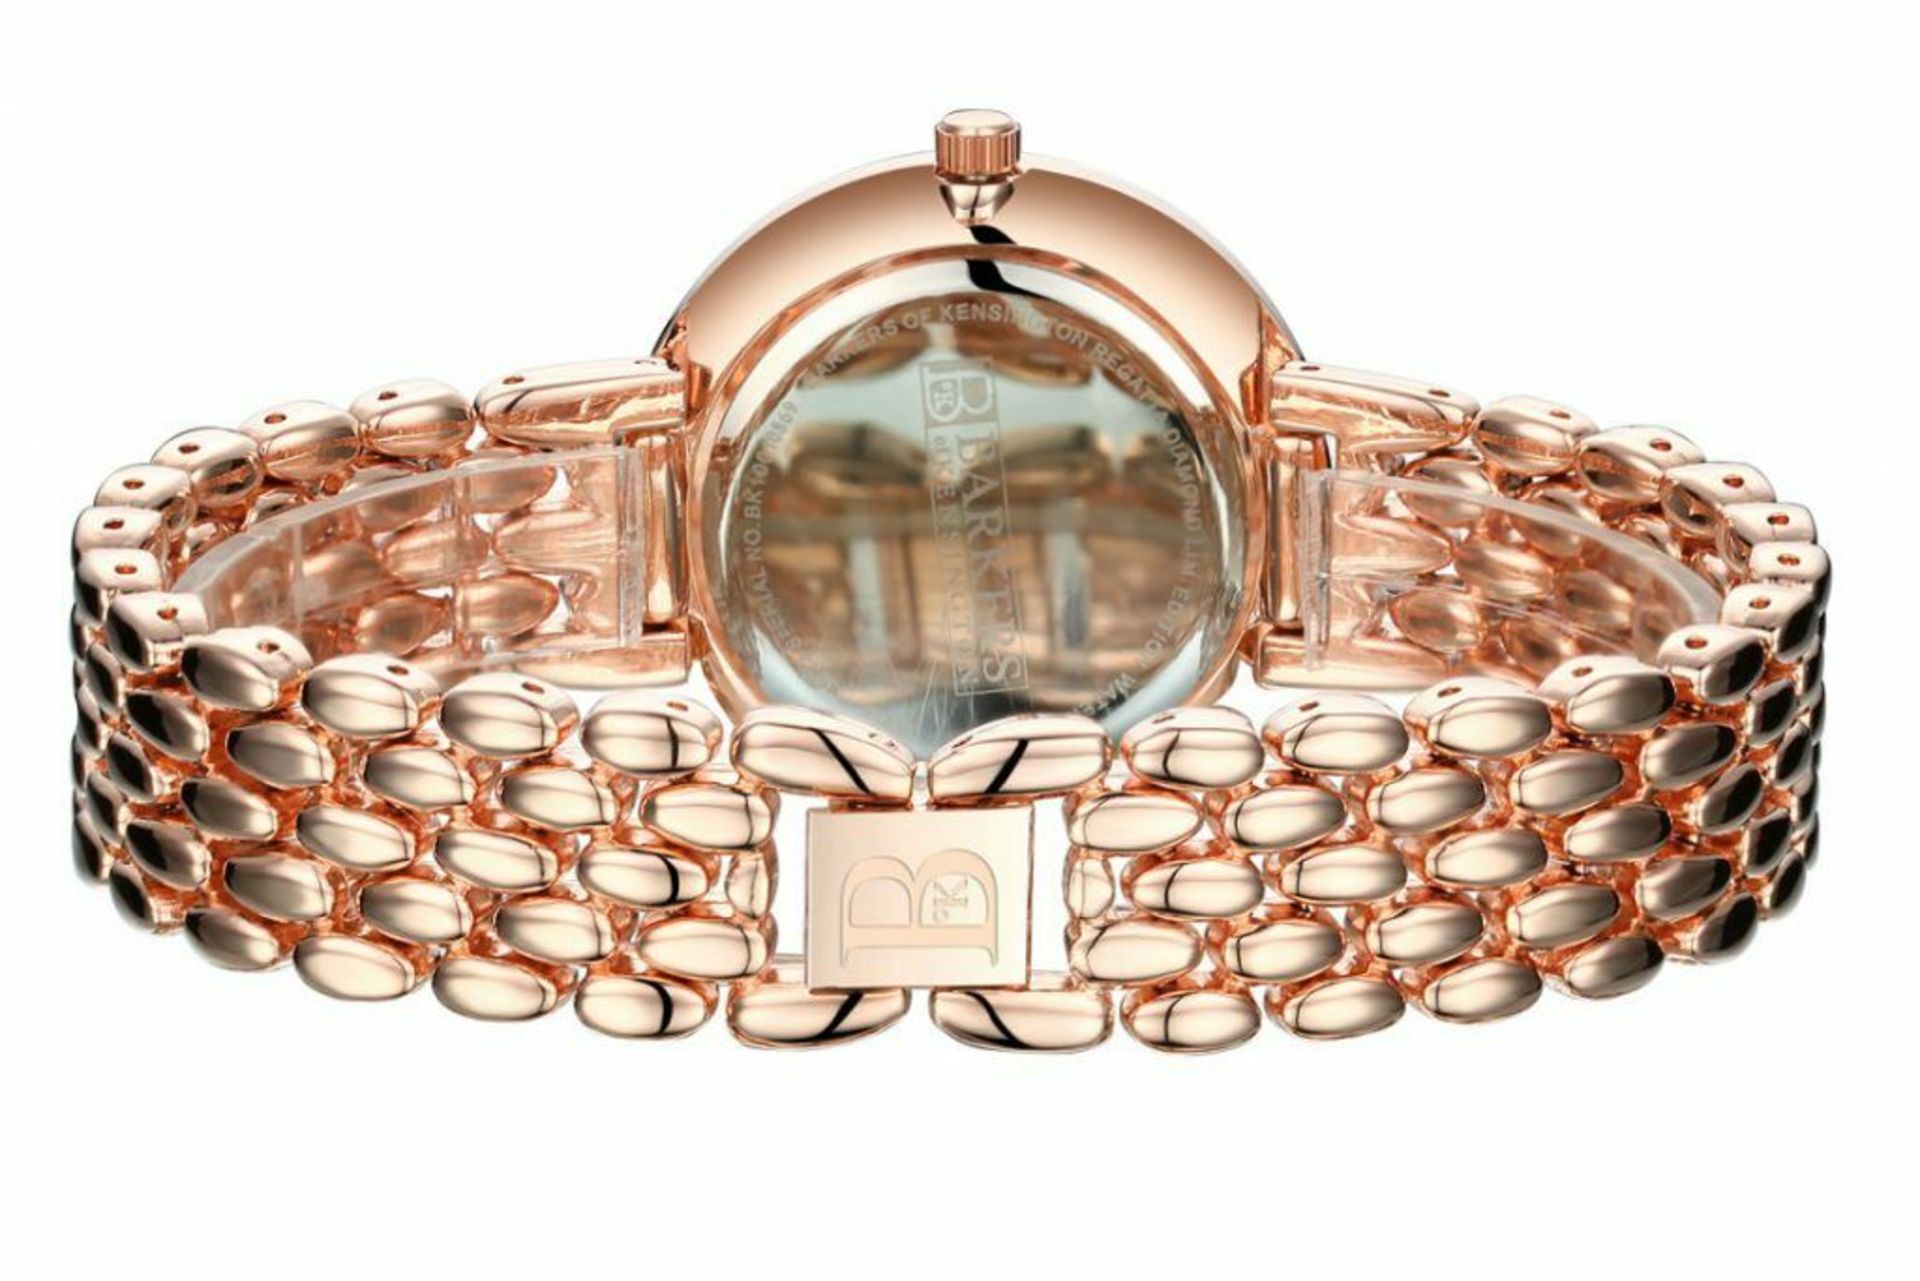 Brand New Barkers of Kensington Ladies Regatta Diamond Set Watch. - Image 2 of 6